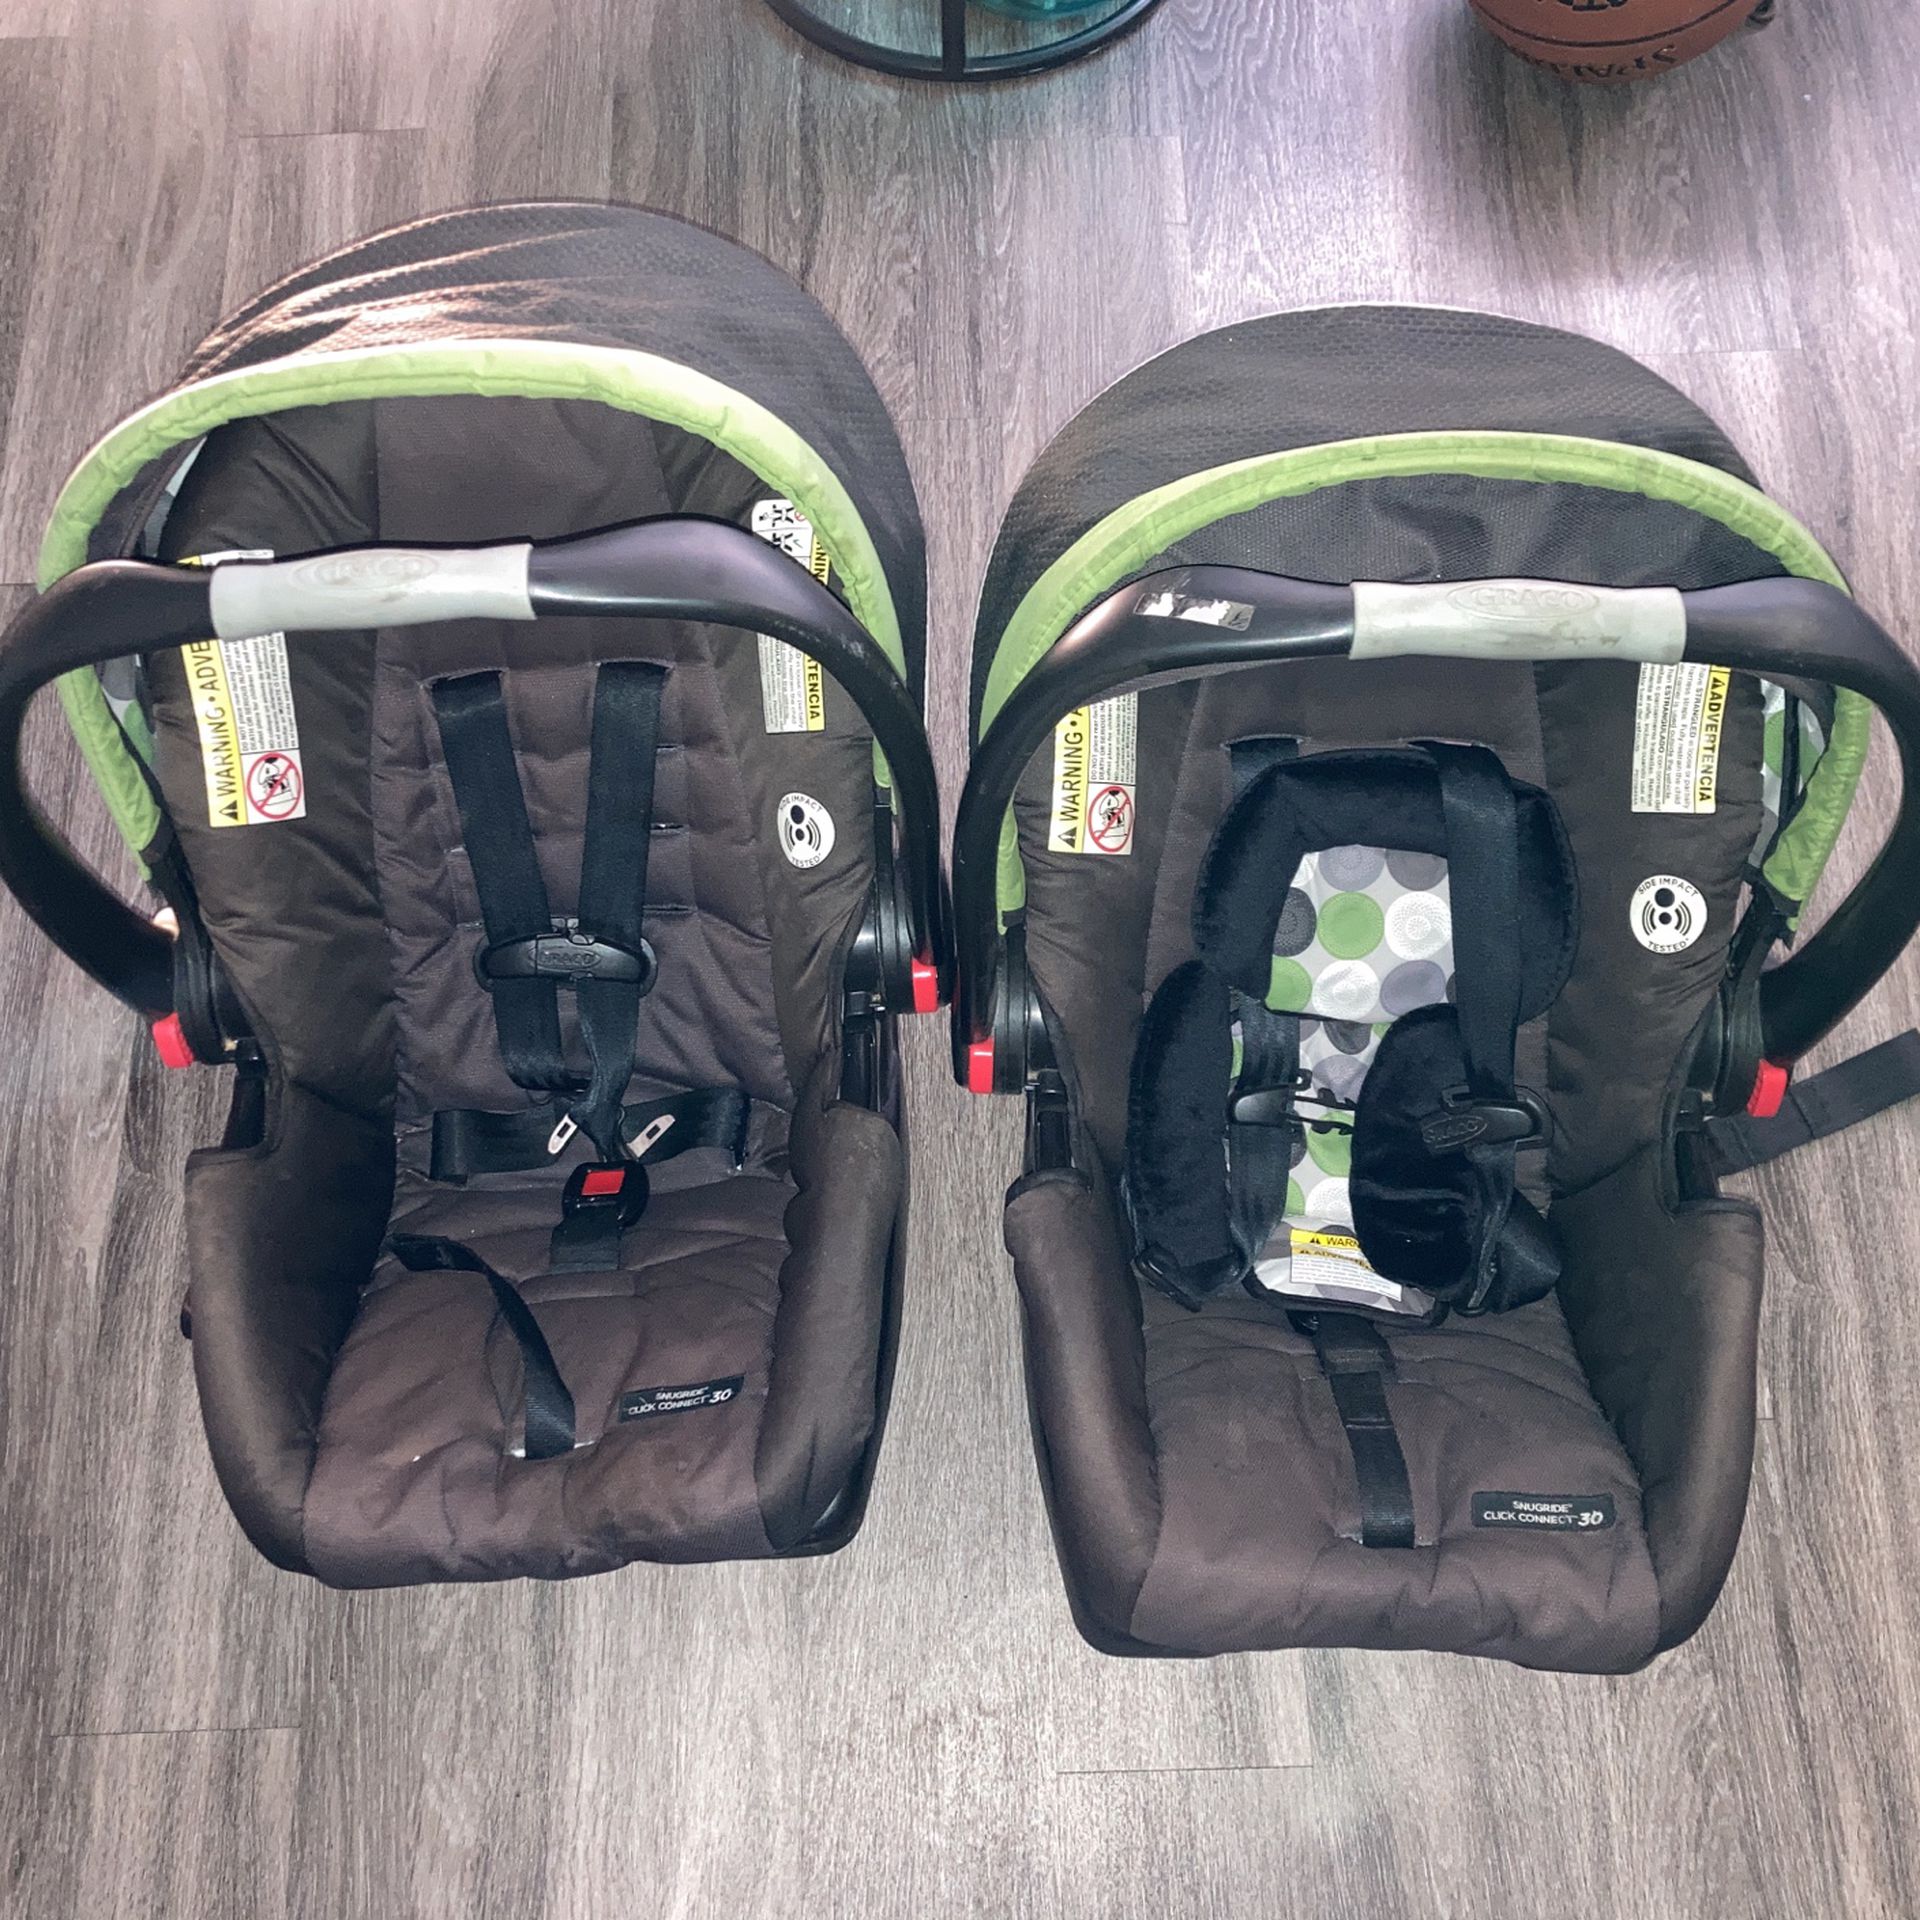 Car Baby Seats 